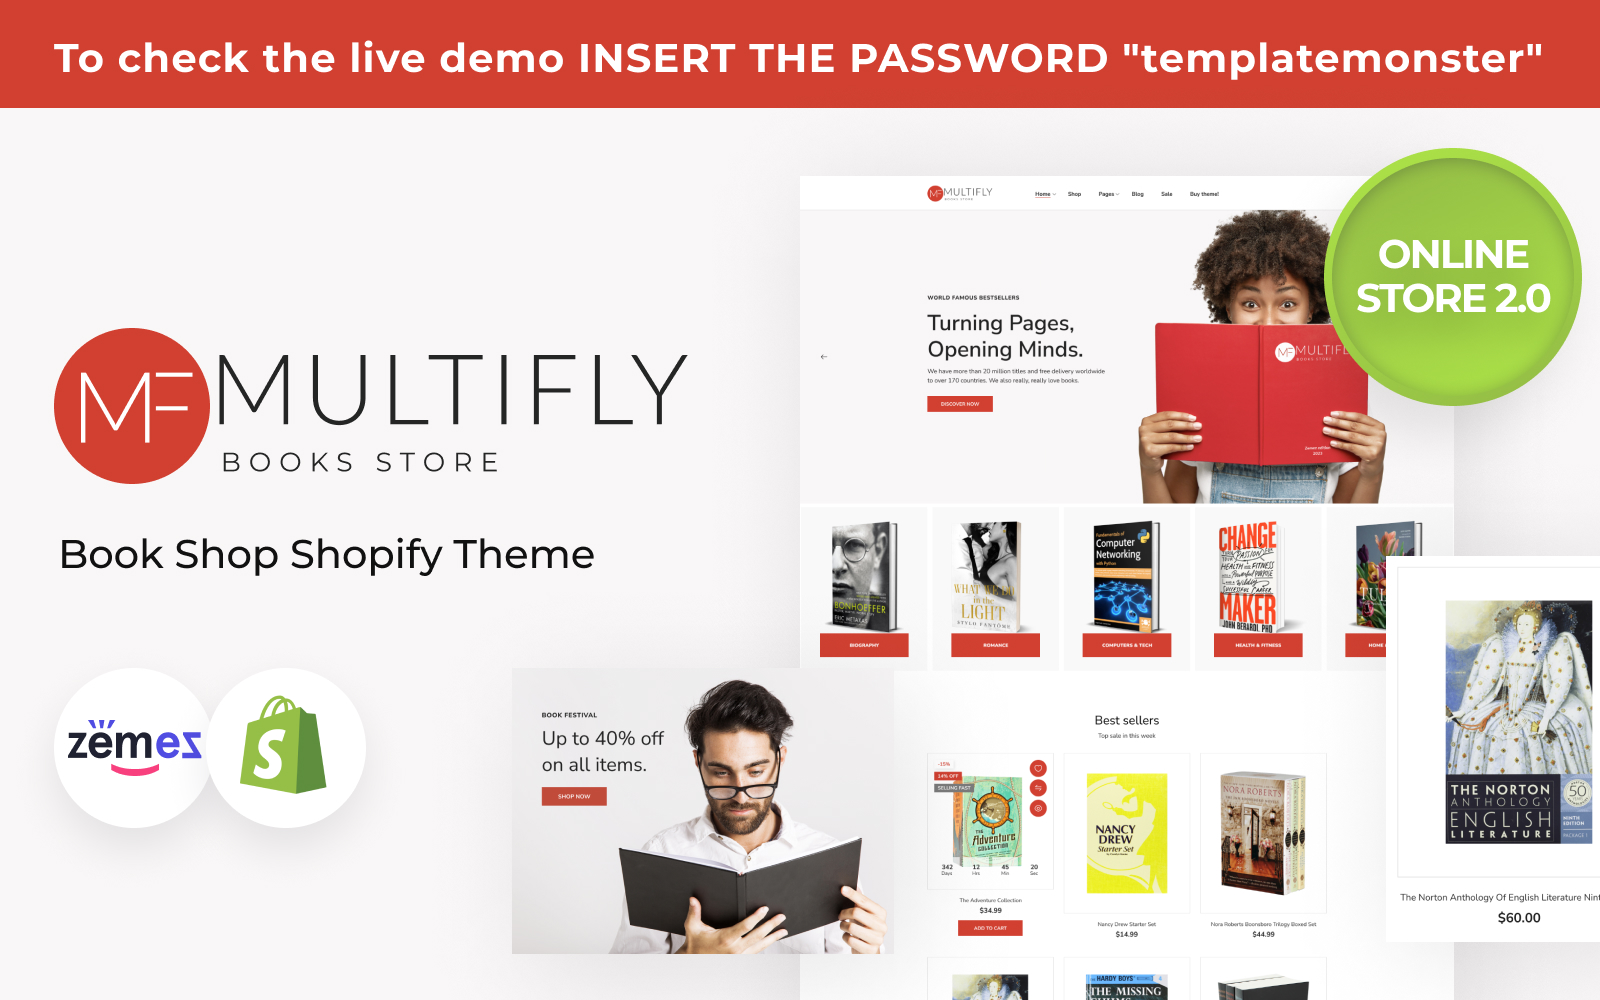 Multifly Author Books Store Premium Responsive Shopify 2.0 Theme